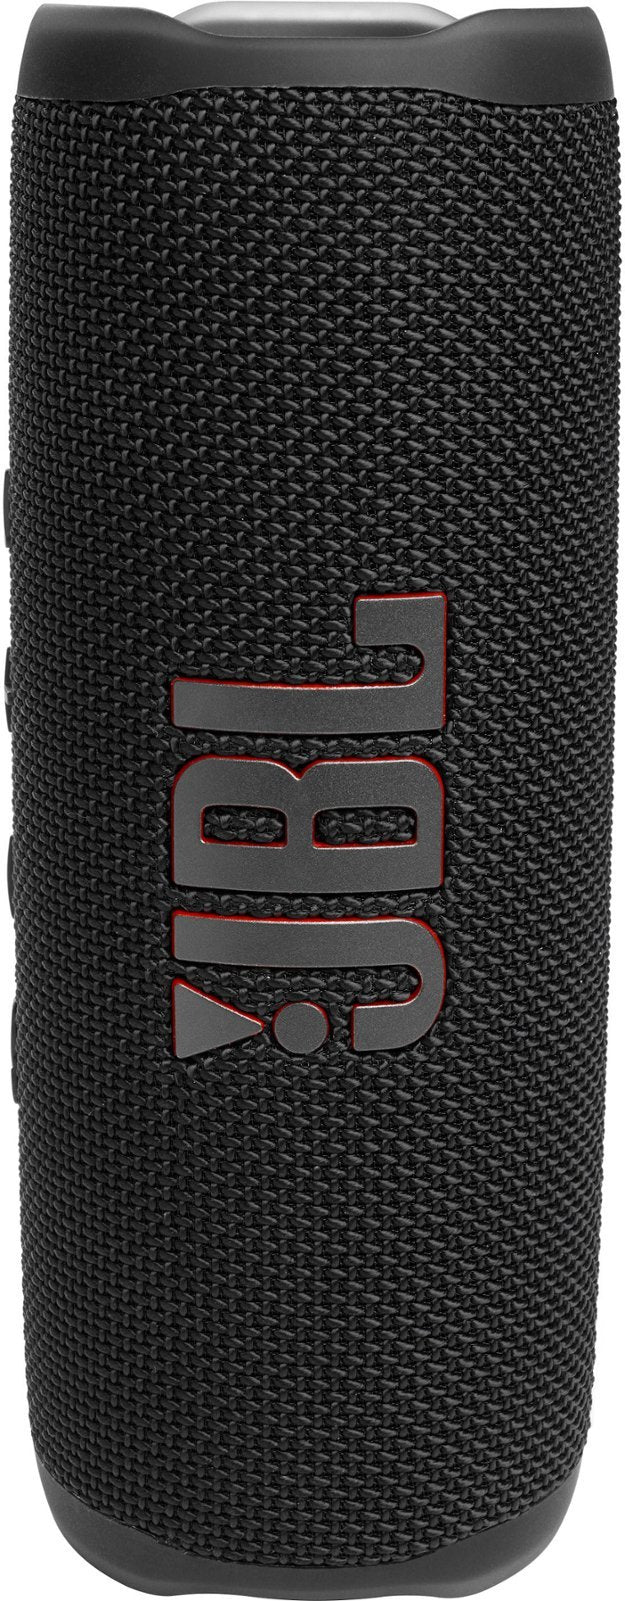 JBL FLIP 6 Portable IP67 Waterproof Wireless Bluetooth Speaker - GT - Black (Certified Refurbished)